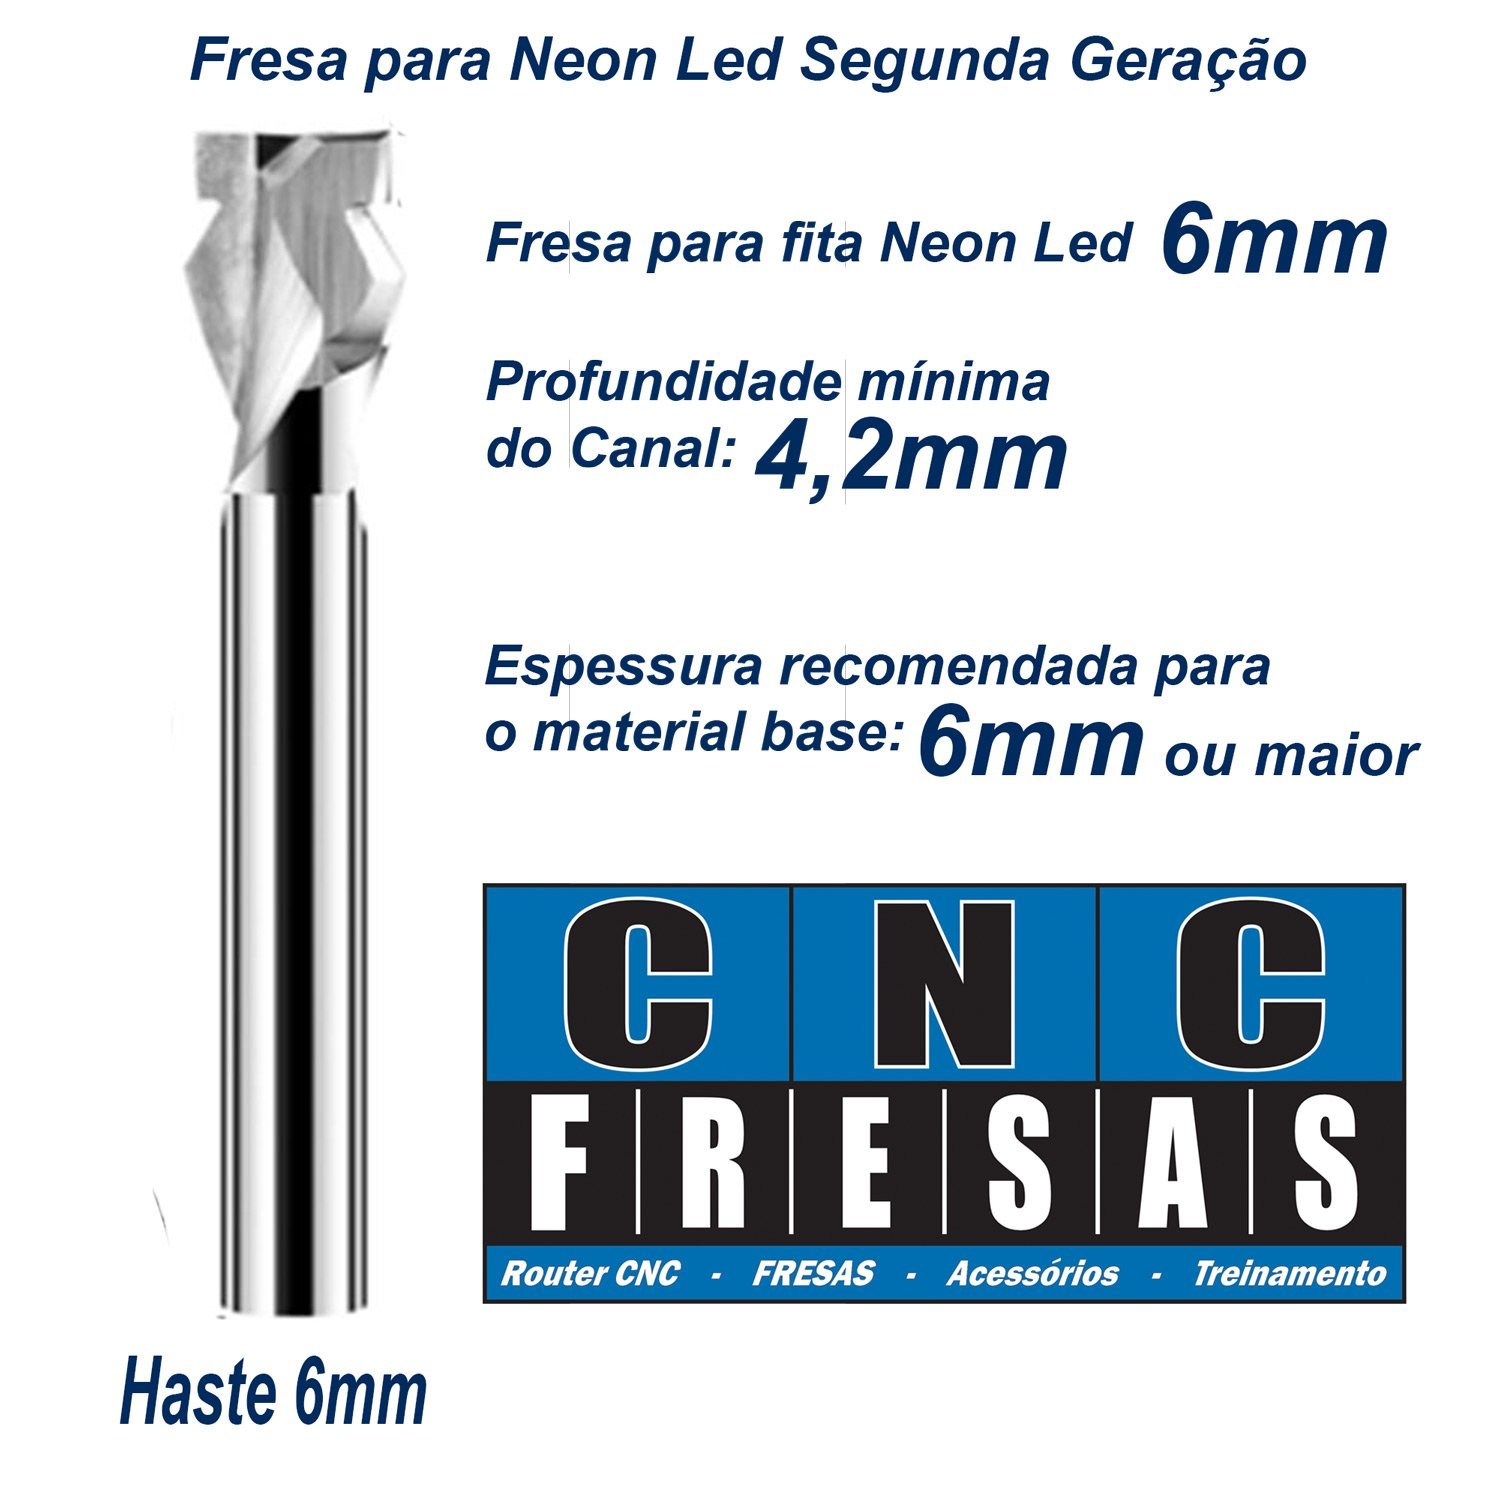 Fresa Canal LED Neon 2 Geração FITA Led 6mm - Canal 4,2mm - Haste 6mm CNCFRESAS - 2